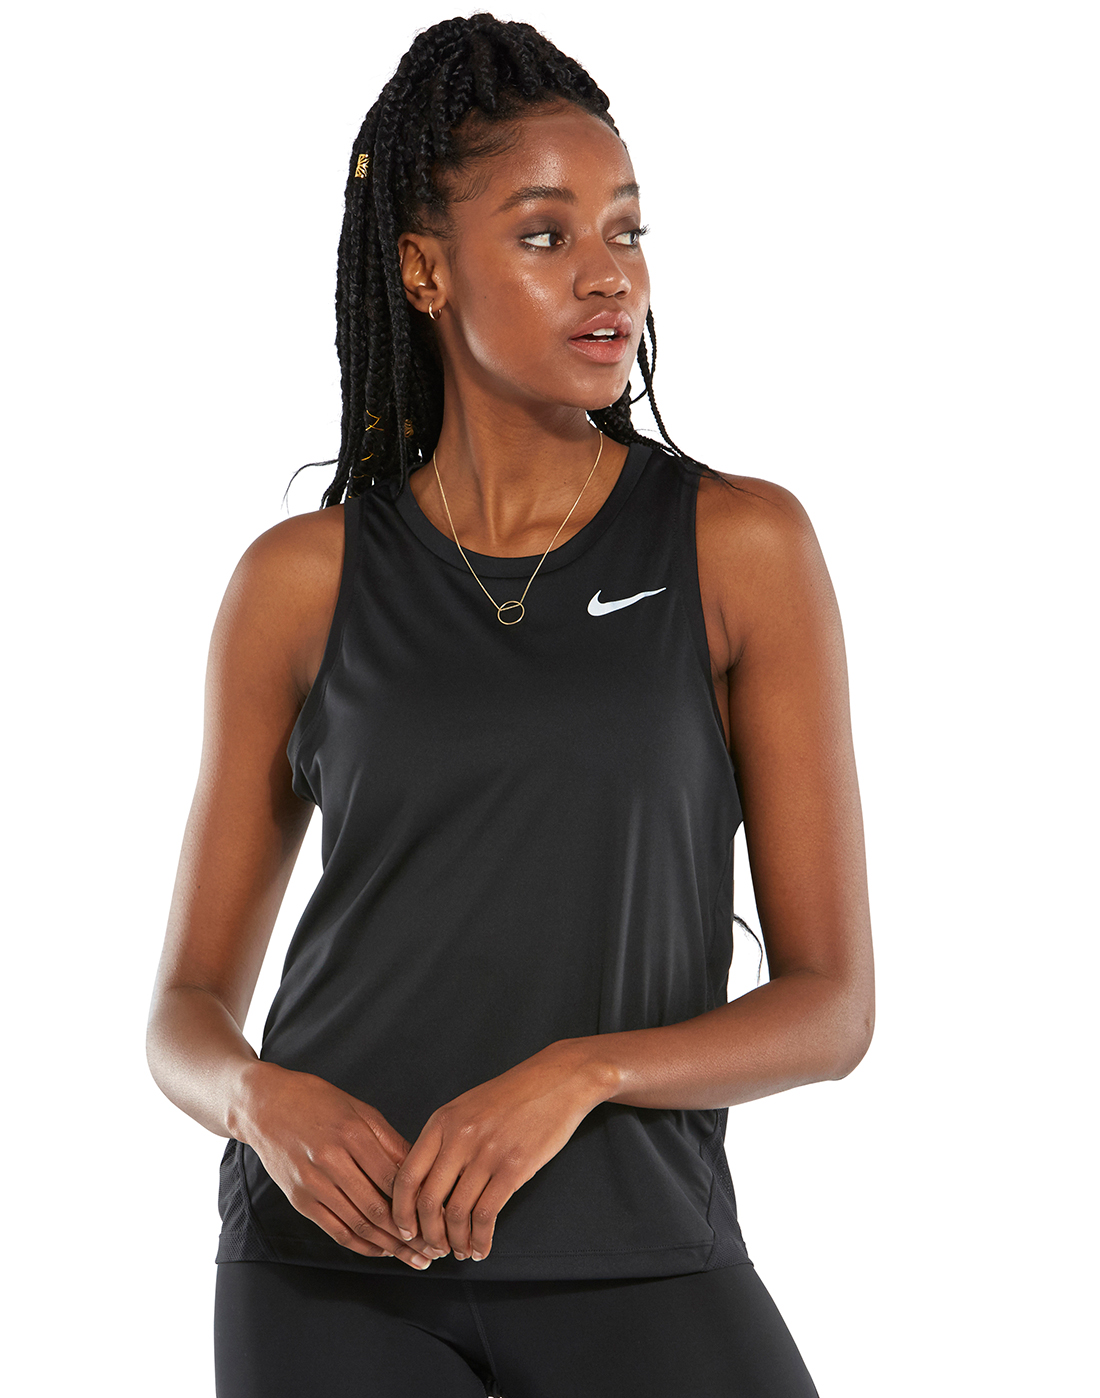 Women's Black Nike Running Tank Top | Life Style Sports